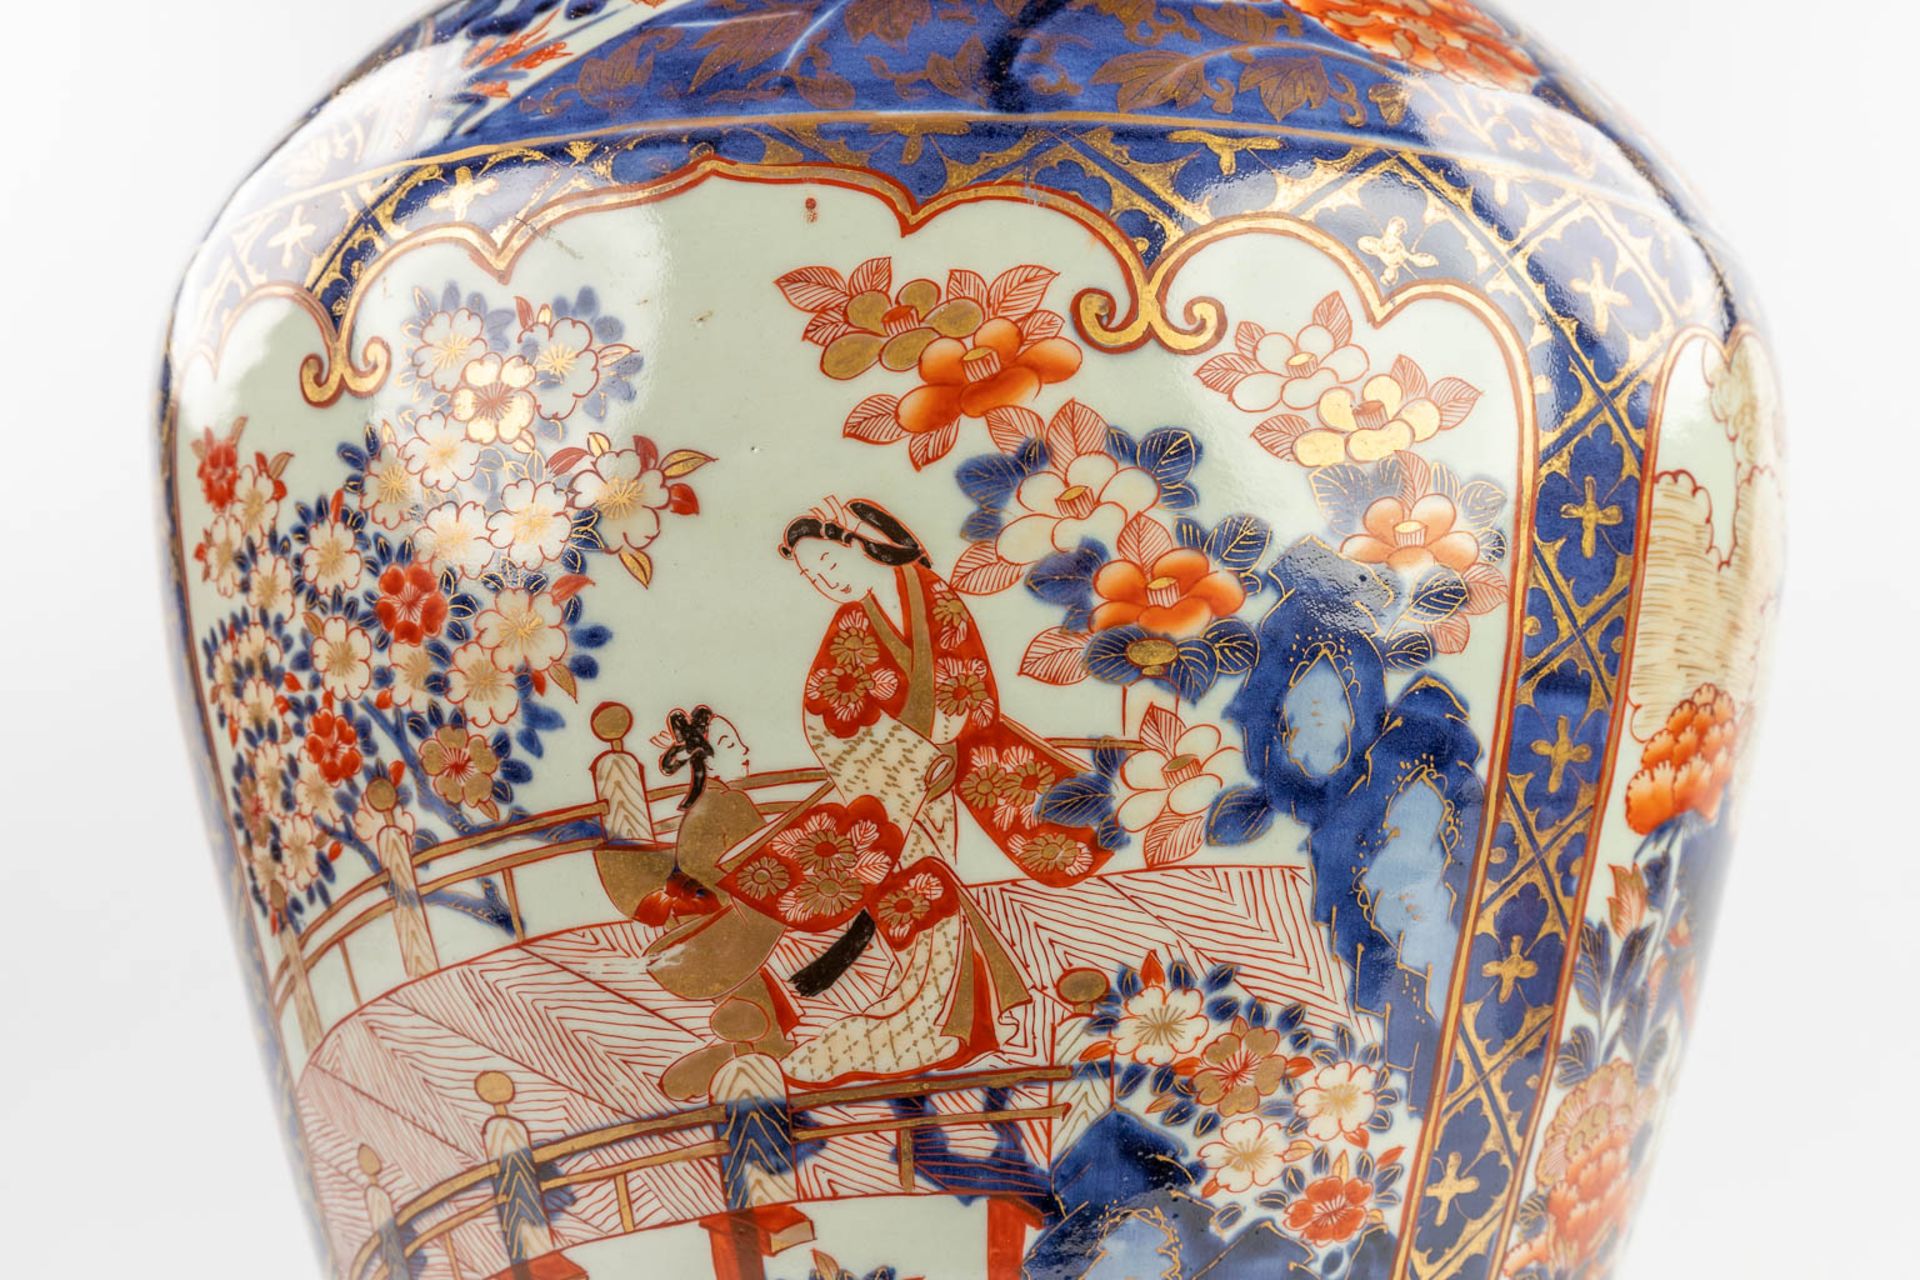 A large vase with lid, Imari porcelain, 19th century. (H: 87 x D: 39 cm) - Image 10 of 15